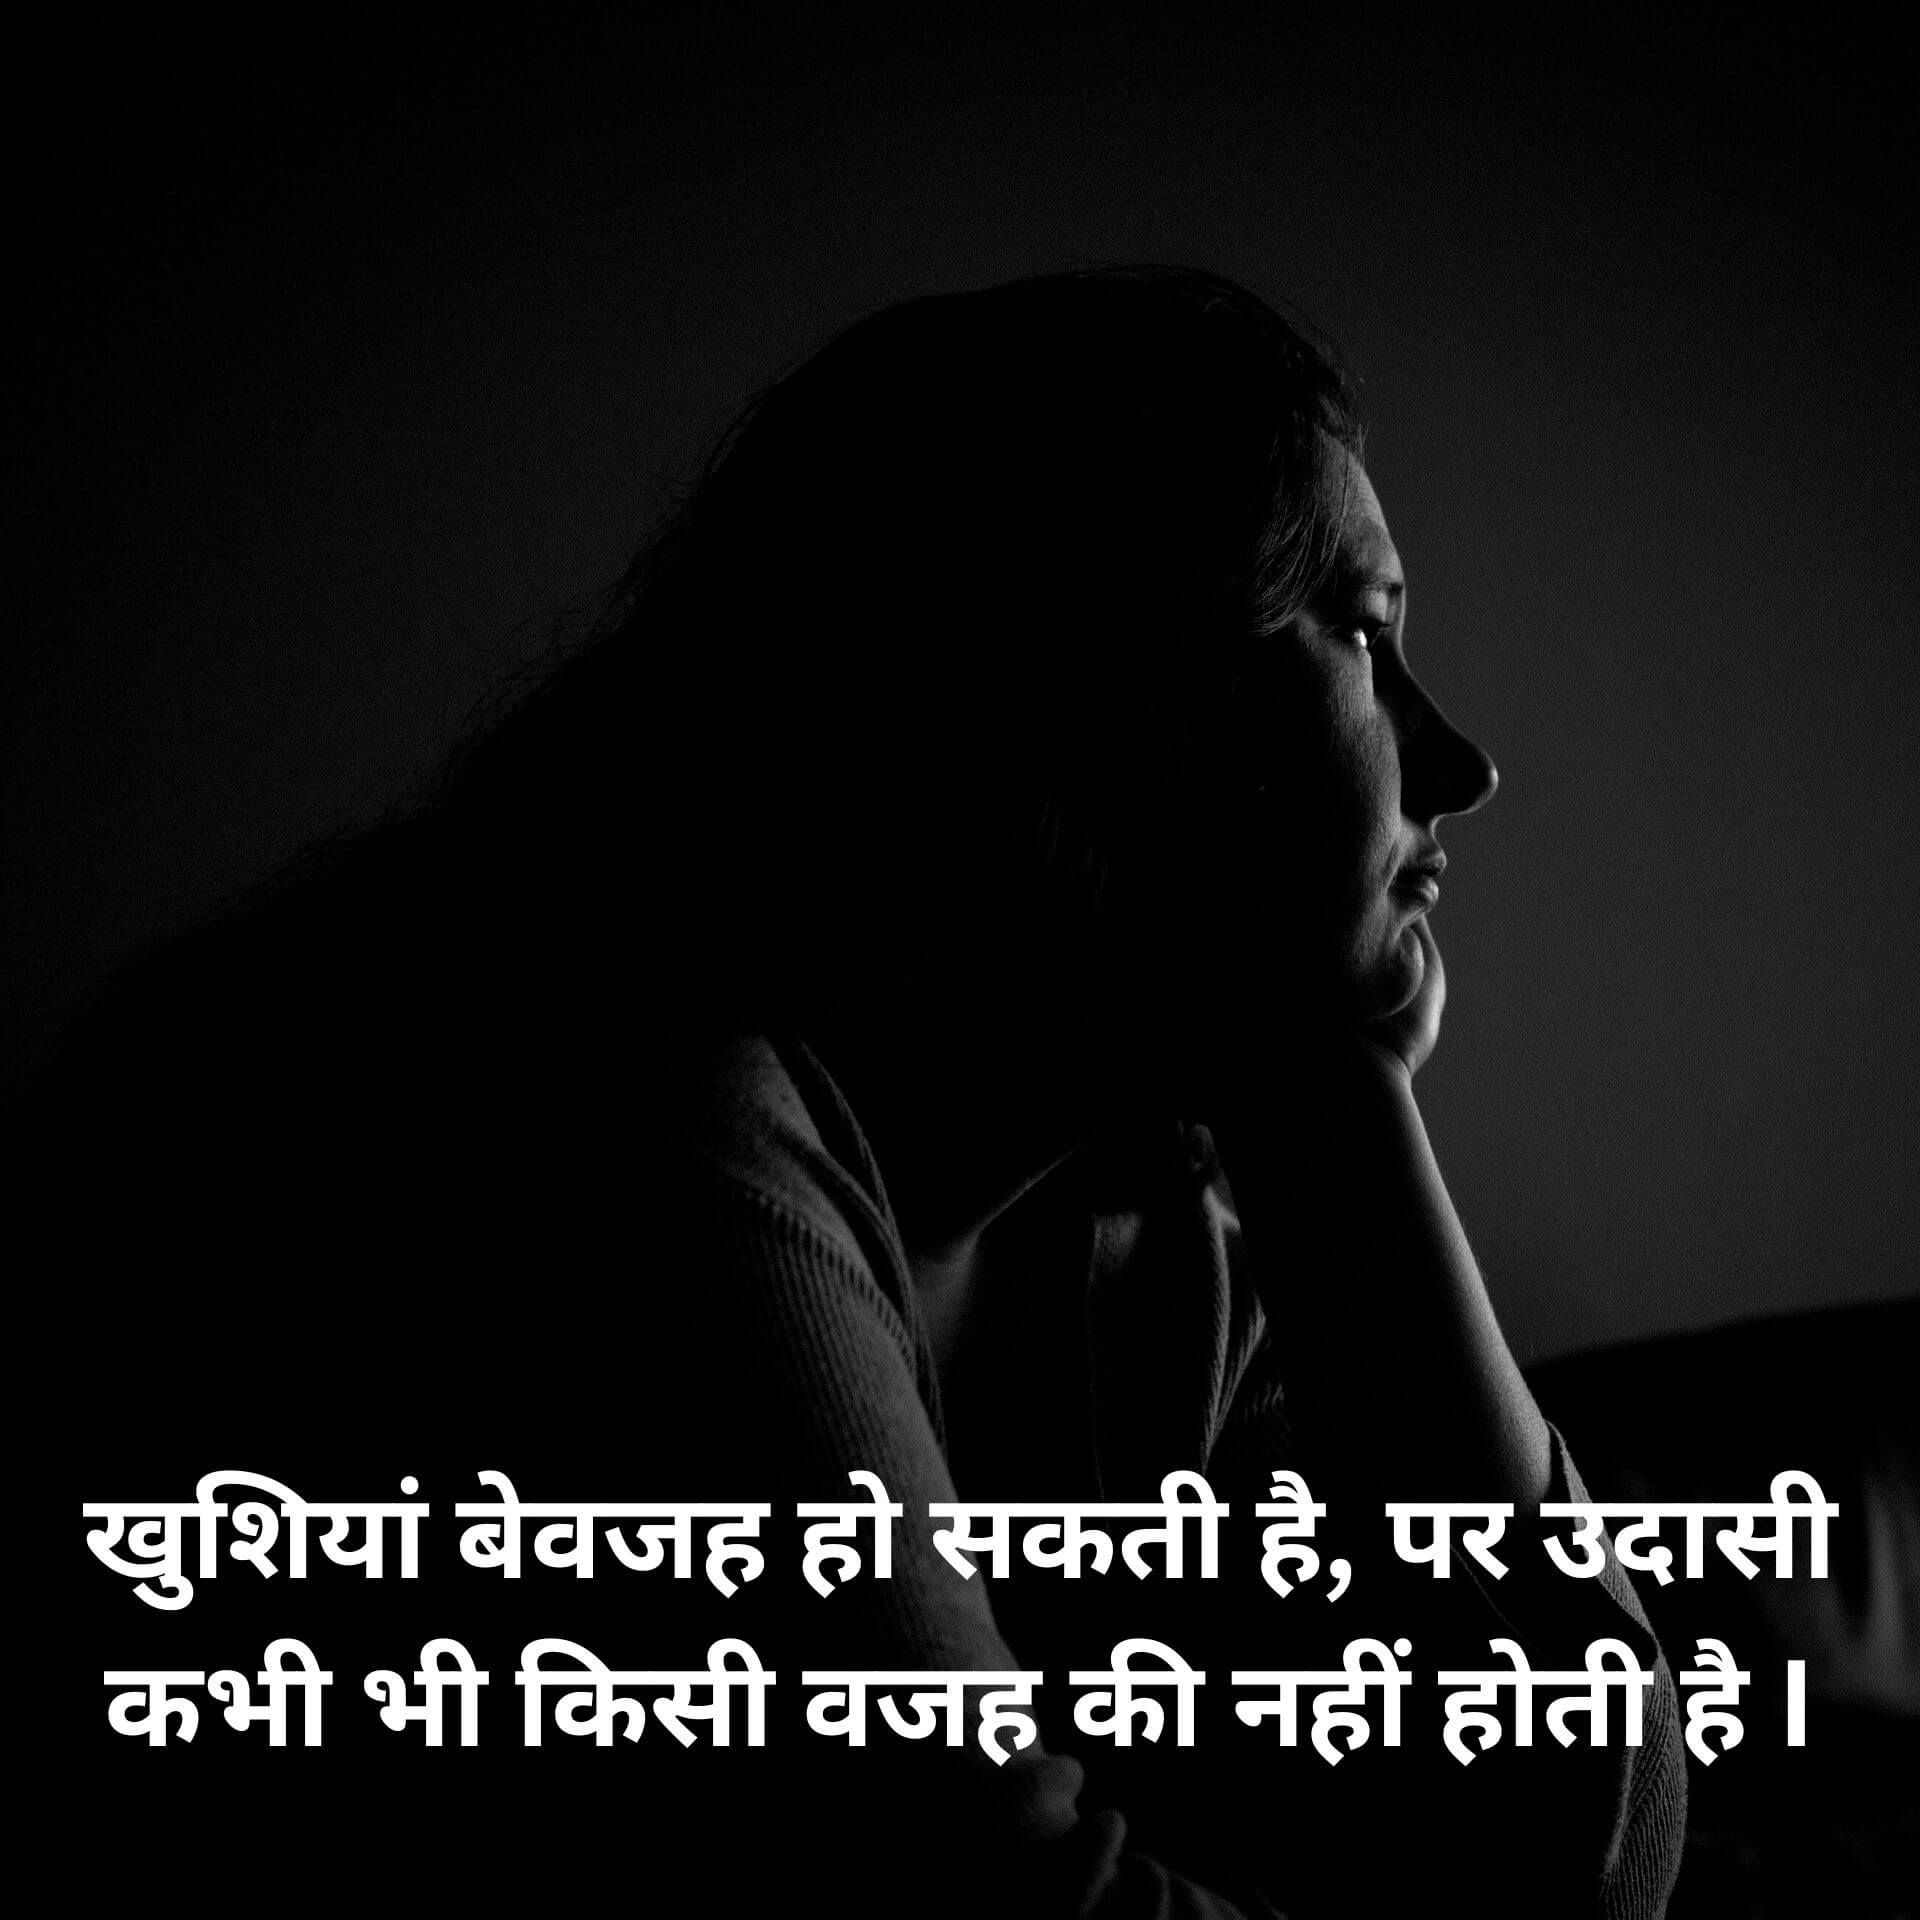 Hindi Sad Whatsapp DP Wallpaper Download for Facebook